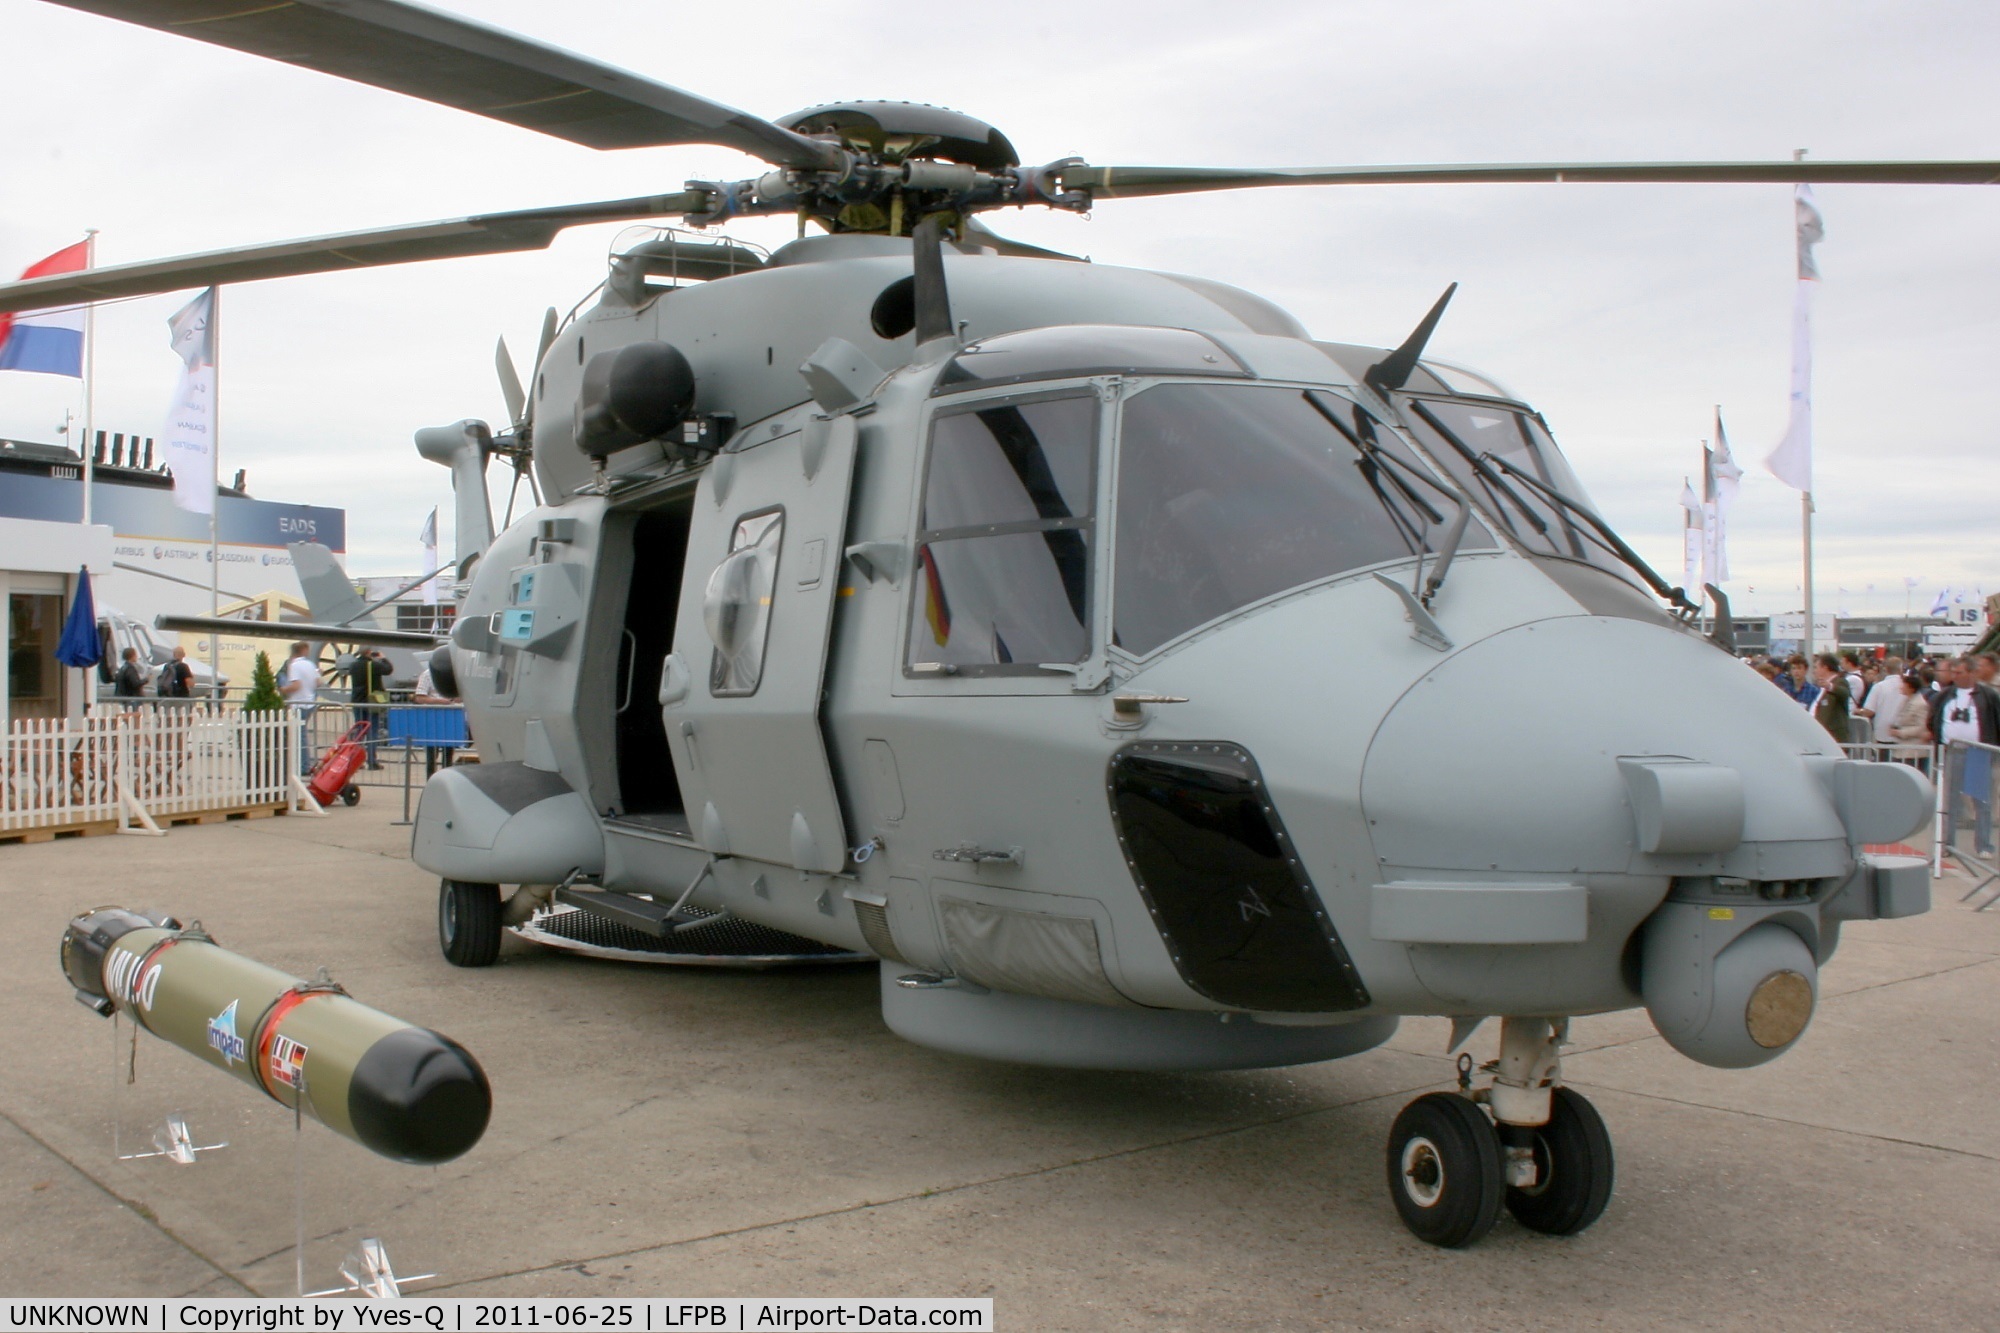 UNKNOWN, Helicopters Various C/N unknown, NHIndustries NH-90 Model, Paris Le Bourget (LFPB-LBG) Air Show in june 2011